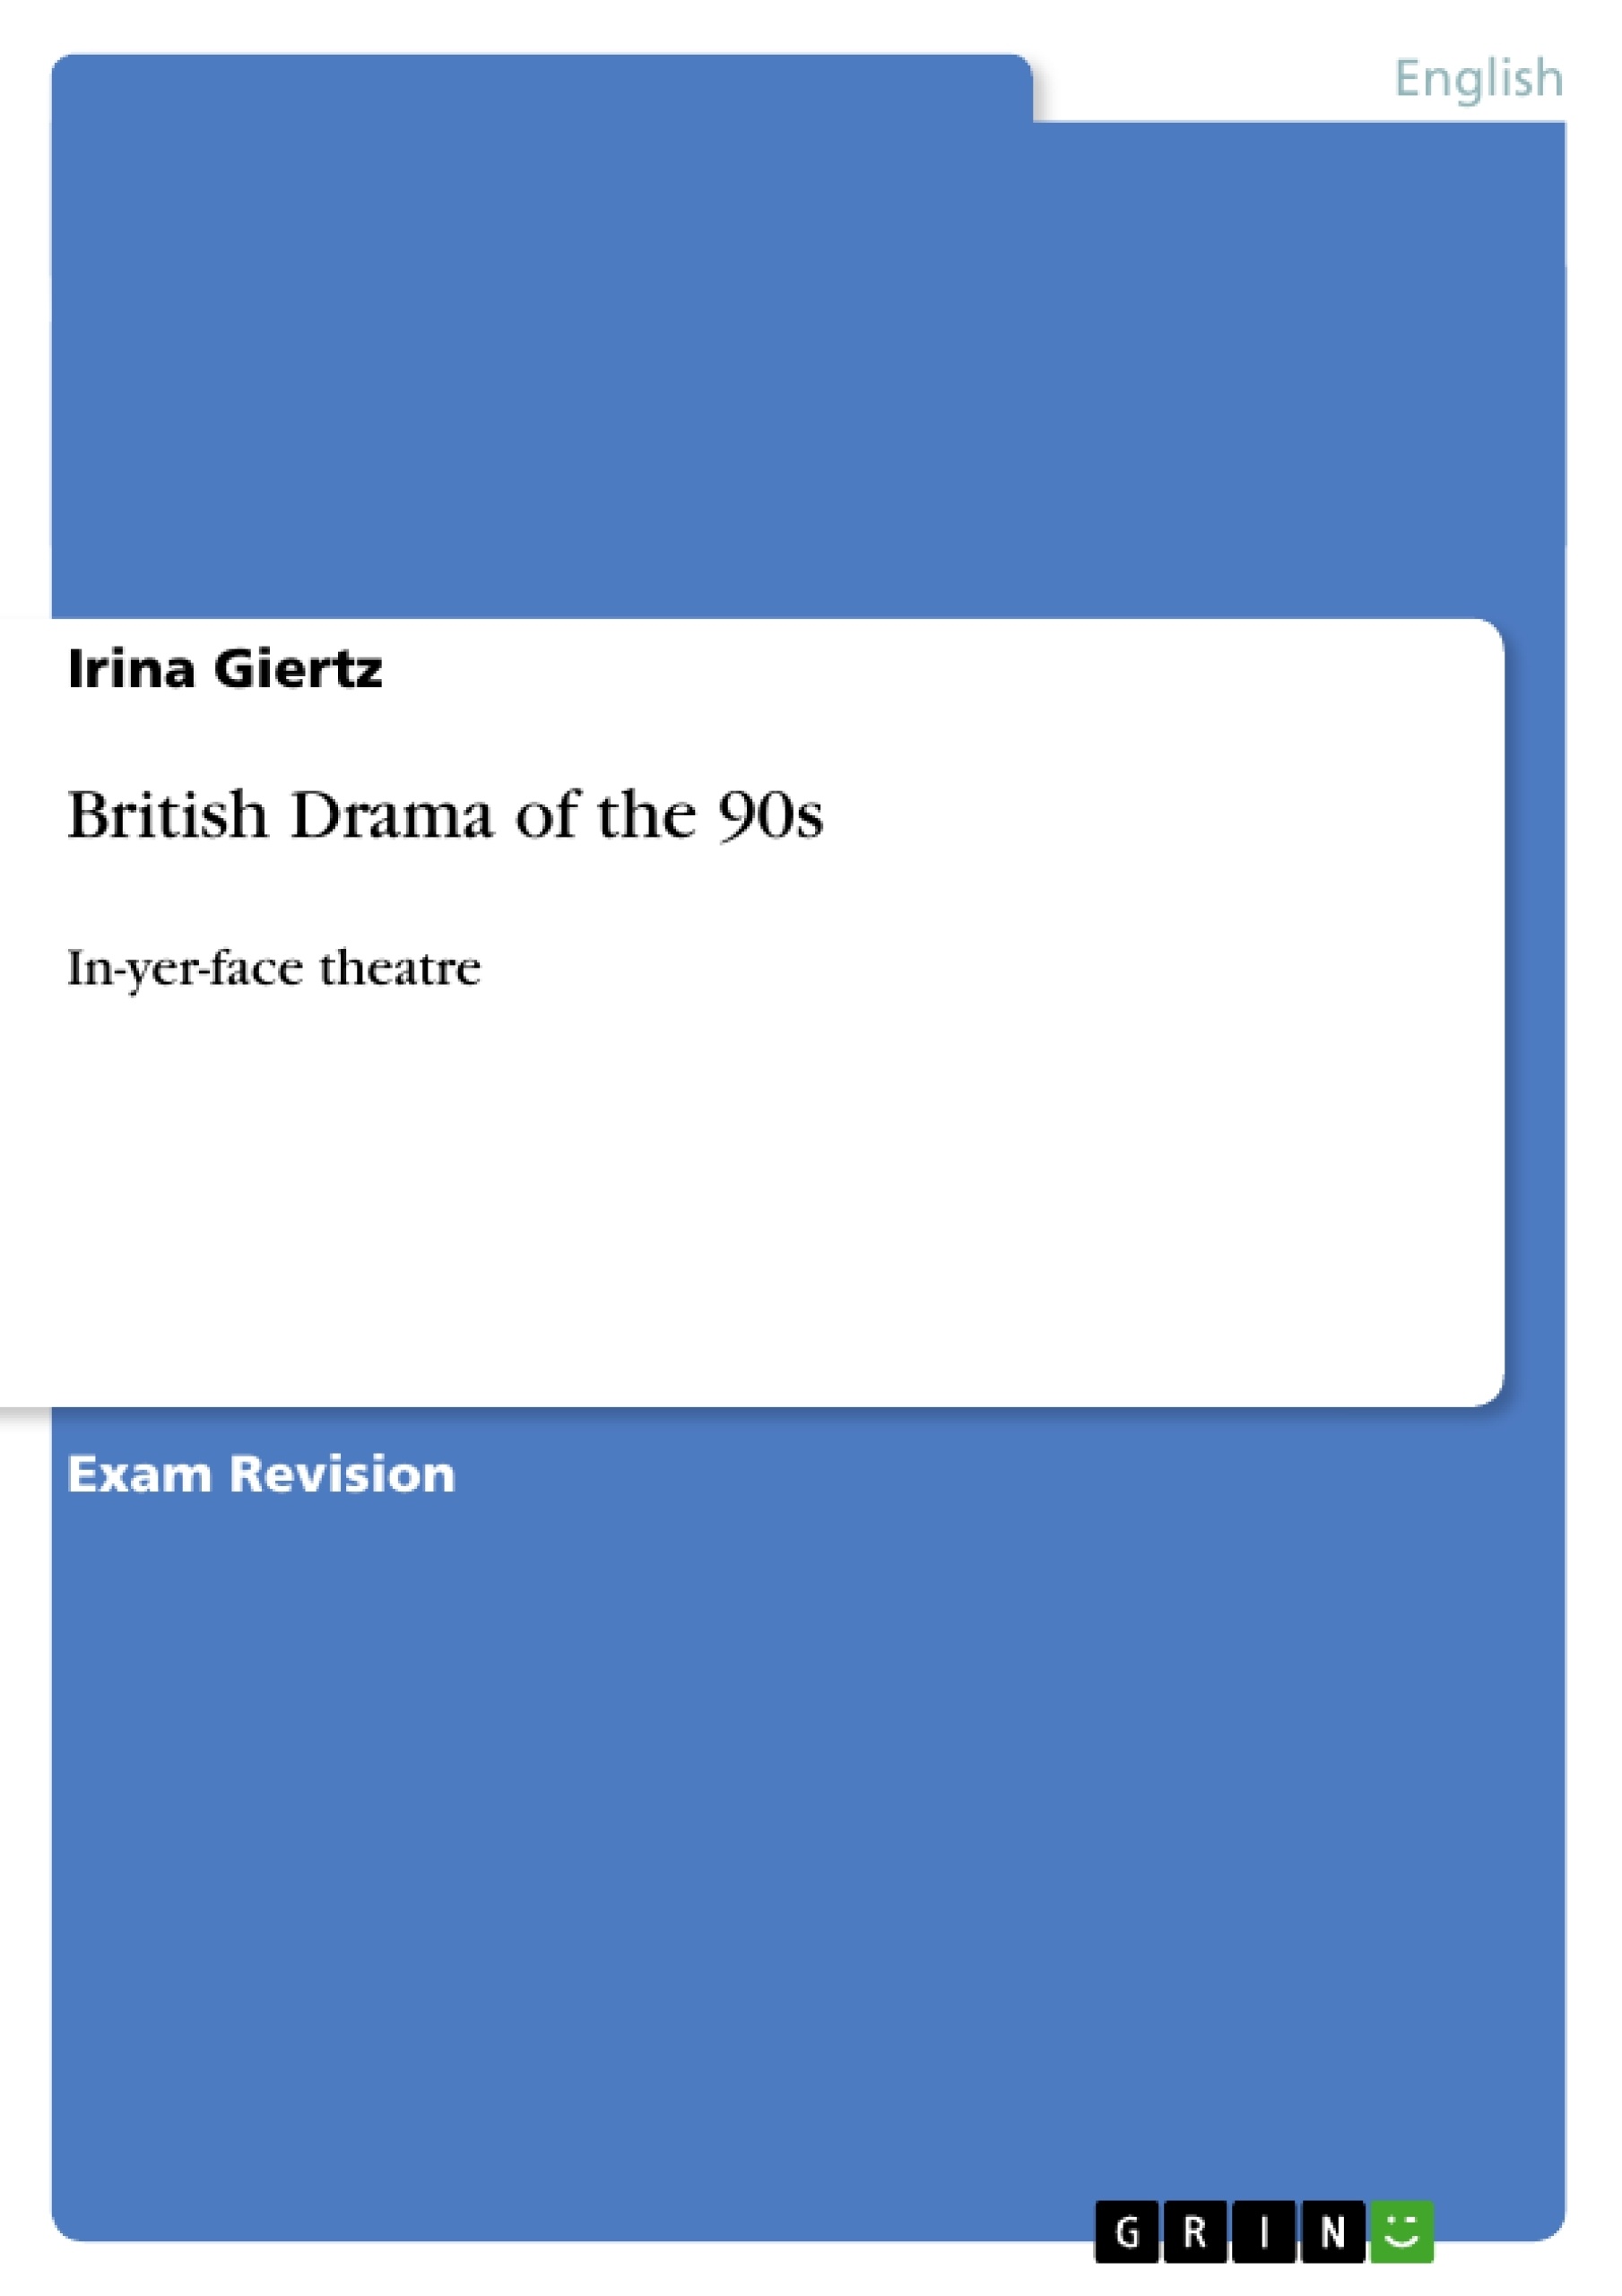 Title: British Drama of the 90s